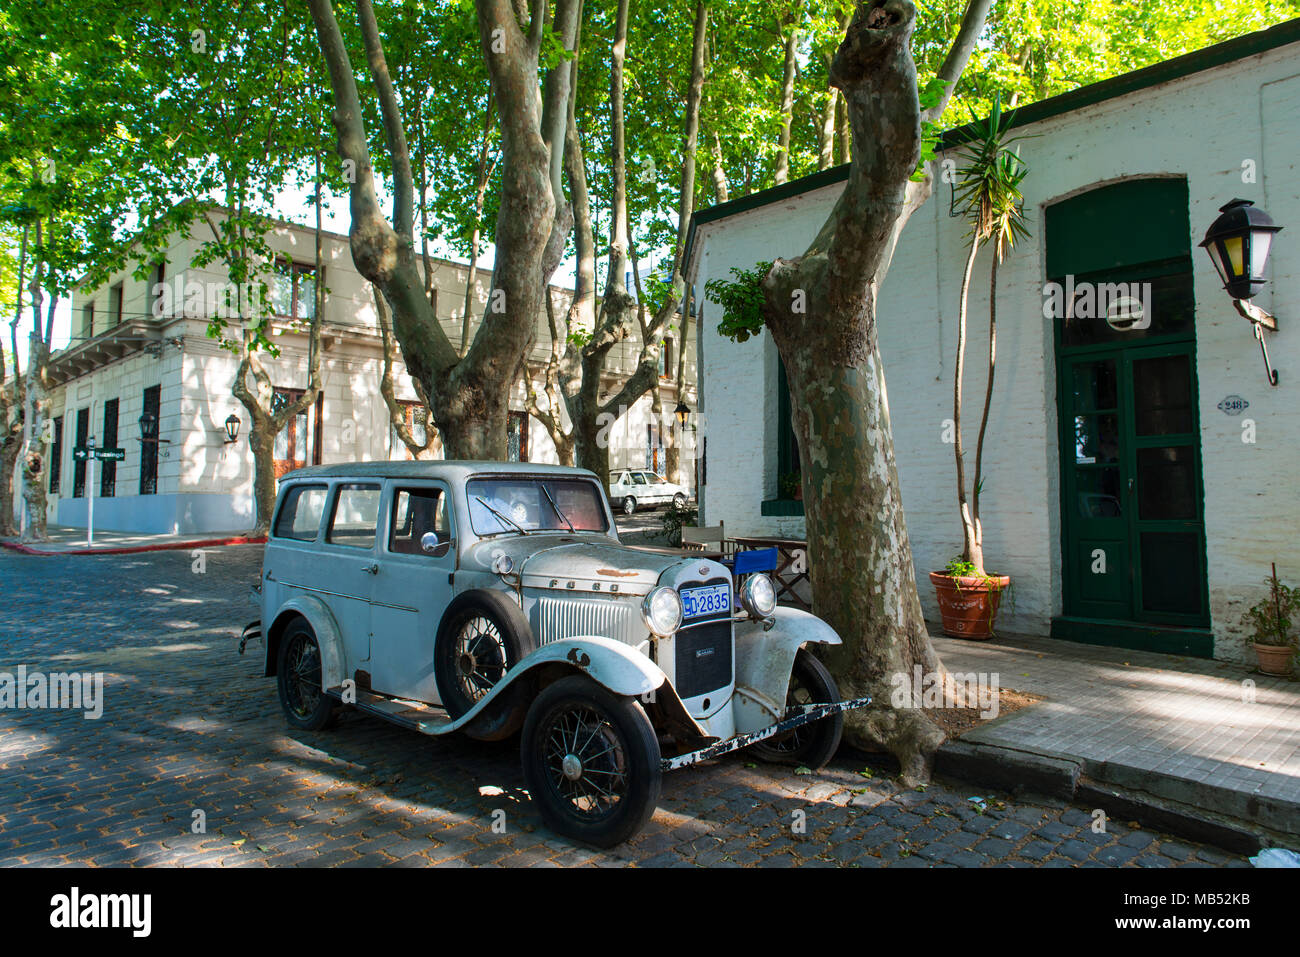 Oldtimer, Ford van, downtown, Colonia del Sacramento, Uruguay Foto Stock